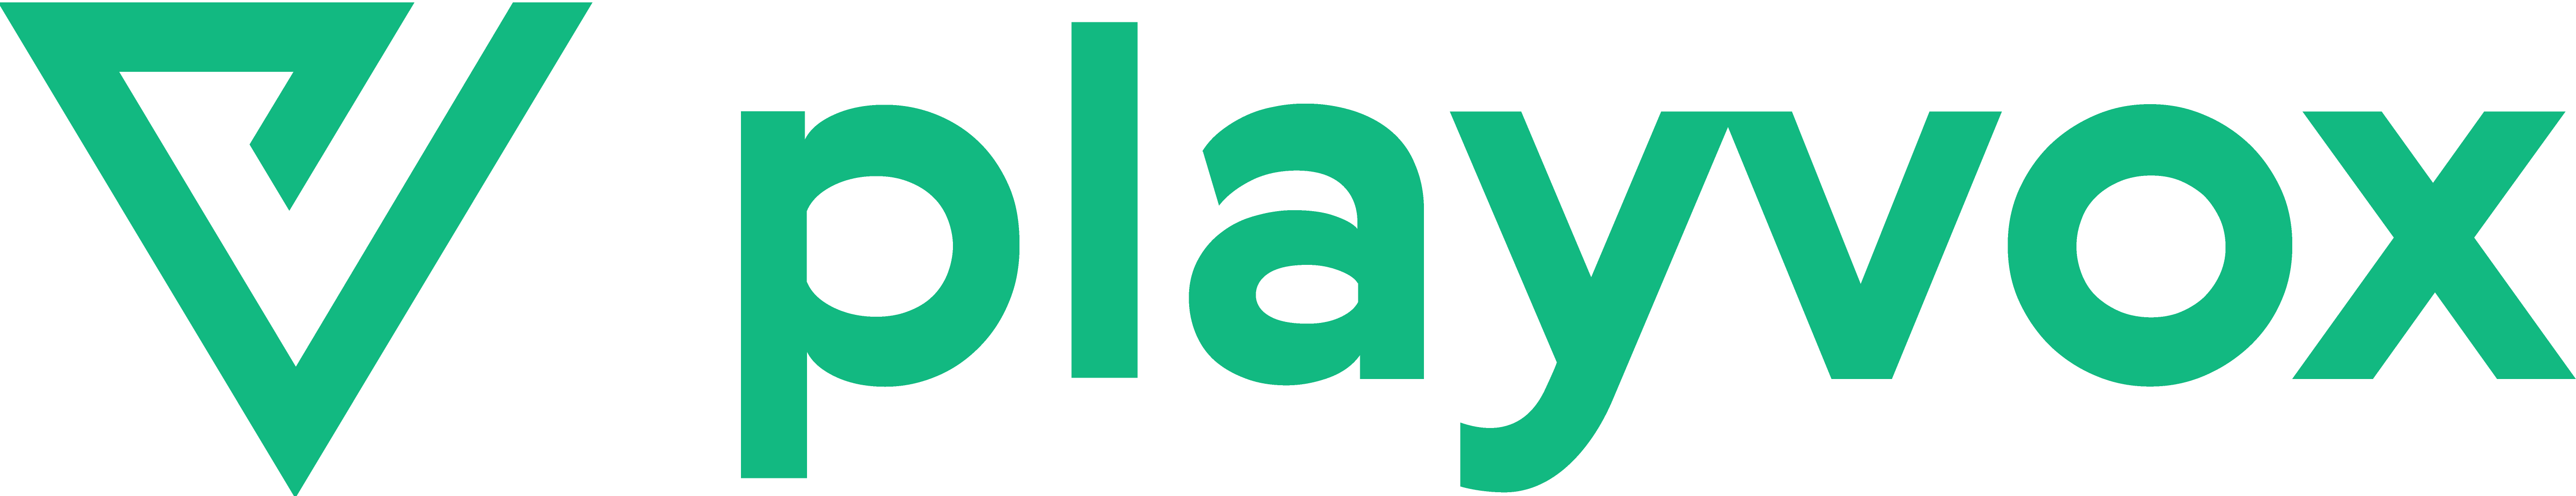 playvox logo-01